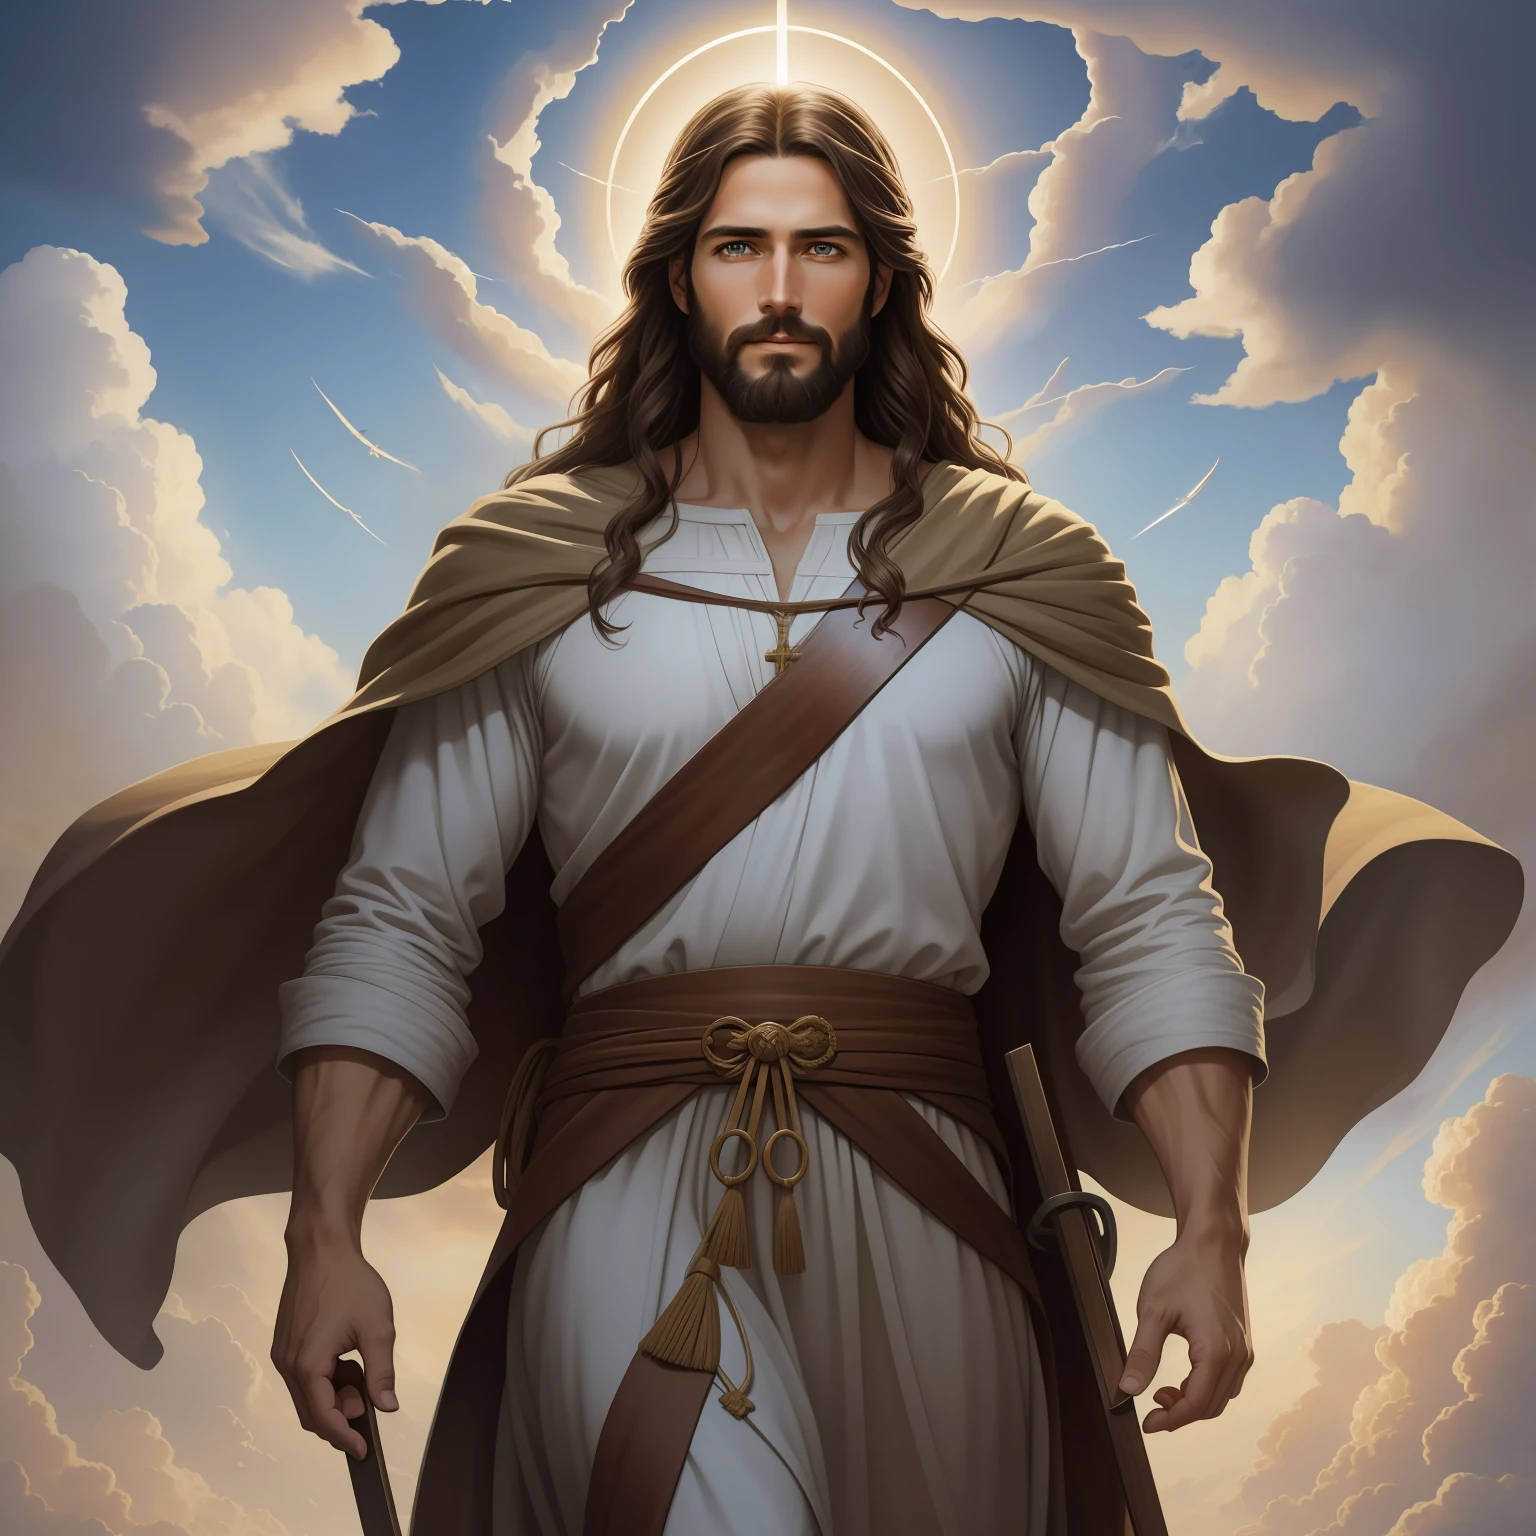 พระเจ้าพระเยซูคริสต์รูปงาม ( พระเยซู) blessing to the sky  35 years old กับ a long brown hair and long beard, ผู้หญิงกำลังรักษา, heaven blessings light กับ a cross background)  ใบหน้ามีความสุข, เหมือนจริง 8k,A beautiful ultra-thin เหมือนจริง portrait of Jesus, ผู้เผยพระวจนะ, ผู้ชายอายุ 35 ปี ภาษาฮีบรูสีน้ำตาล, ผมสั้นสีน้ำตาล, ดวงตาที่สมบูรณ์แบบอย่างแท้จริง, หนวดเครายาวสีน้ำตาล, กับ, ช่วยเหลือผู้คน , สวมเสื้อลินินตัวยาวปิดบริเวณหน้าอก, ในมุมมองด้านหน้า, เต็มตัว, ตามพระคัมภีร์, เหมือนจริง,โดย ดิเอโก้ เบลัซเกซ,ปีเตอร์ พอล รูเบนส์,แรมแบรนดท์,อเล็กซ์ รอสส์,8k, แนวคิดศิลปะ, Photoเหมือนจริง, เหมือนจริง,  ภาพประกอบ, ภาพวาดสีน้ำมัน, สถิตยศาสตร์, Hyperเหมือนจริง, ช่วยเหลือผู้คน , ศิลปะดิจิทัล, สไตล์, watercolorReal Jesus flying on sky กับ a flying cloud in the background, พระเยซูทรงเดินบนน้ำ, ตามพระคัมภีร์ illustration, epic ตามพระคัมภีร์ representation, บังคับให้เขาหนี, ออกมาจากมหาสมุทร, ! จับมือกัน!, ขึ้นฝั่ง, เทพเจ้าแห่งมหาสมุทร, การแสดงที่สวยงาม, โมเดล 3 มิติ 8k, เหมือนจริง,
a 3D เหมือนจริง of พระเยซู กับ a halo in the sky, พระเยซู christ, ยิ้มอยู่ในสวรรค์, portrait of พระเยซู christ, พระเยซู face, 35 เทพเจ้าหนุ่มผู้ยิ่งใหญ่, ภาพเหมือนของเทพเจ้าแห่งสวรรค์, เกร็ก โอลเซ่น, gigachad พระเยซู, พระเยซู of nazareth, พระเยซู, ใบหน้าของพระเจ้า, พระเจ้ากำลังมองมาที่ฉัน, เขาทักทายคุณอย่างอบอุ่น, เขามีความสุข, ภาพประจำตัว